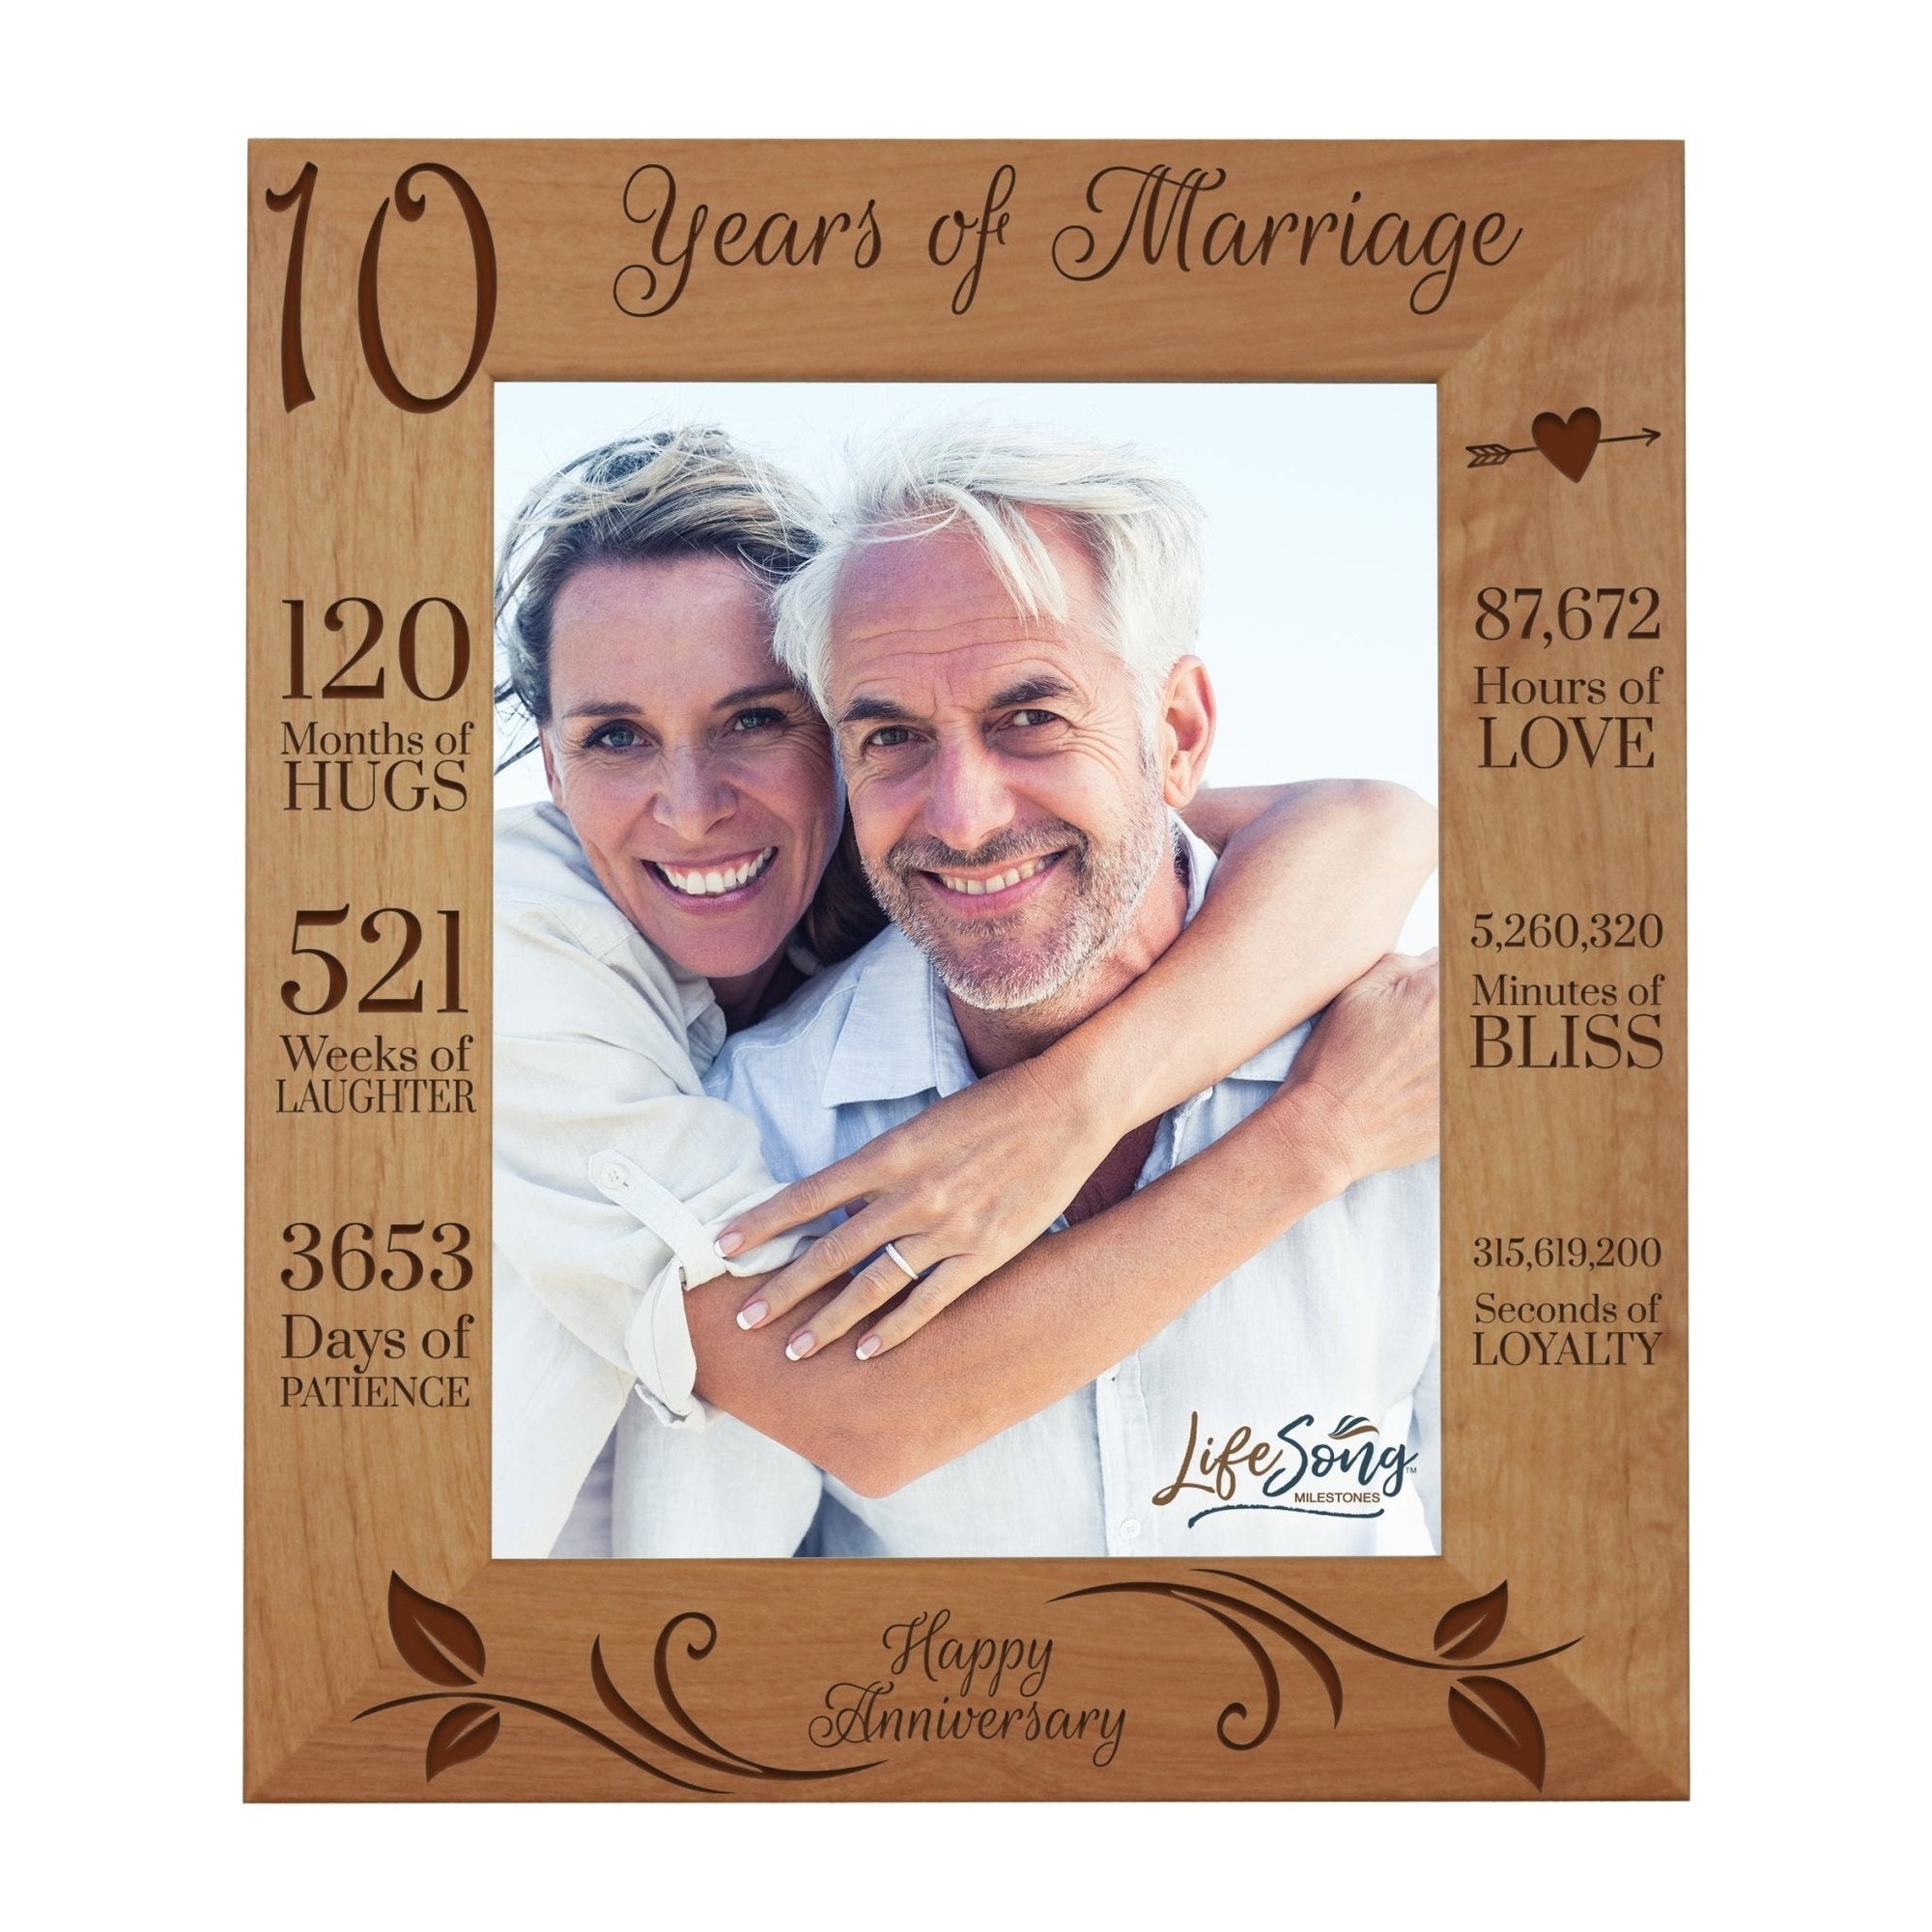 Couples 10th Wedding Anniversary Photo Frame Home Decor Gift Ideas - Happy Anniversary - LifeSong Milestones